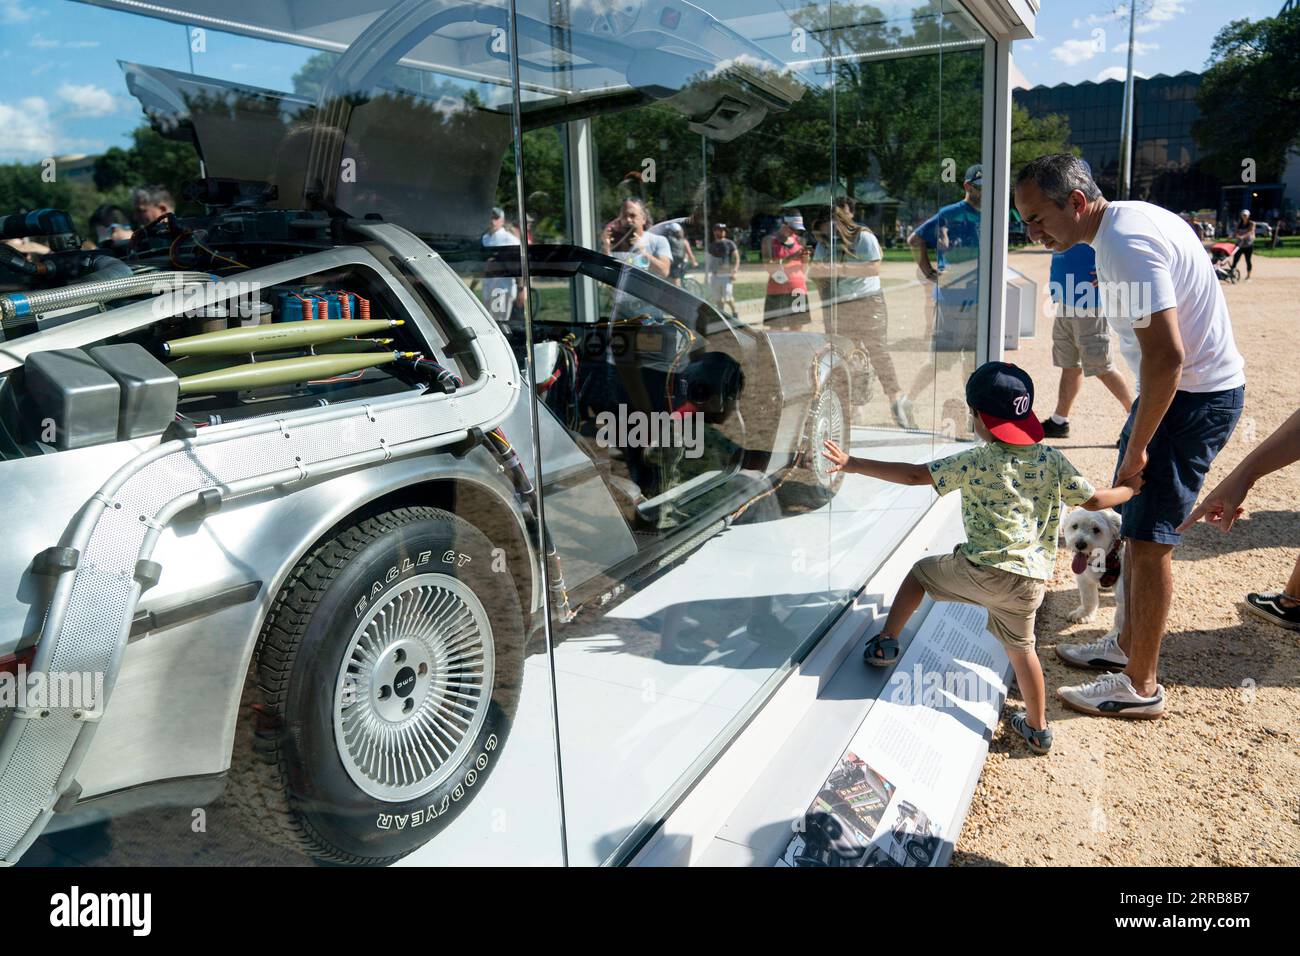 DeLorean goes back to the future to reproduce DMC-12 car